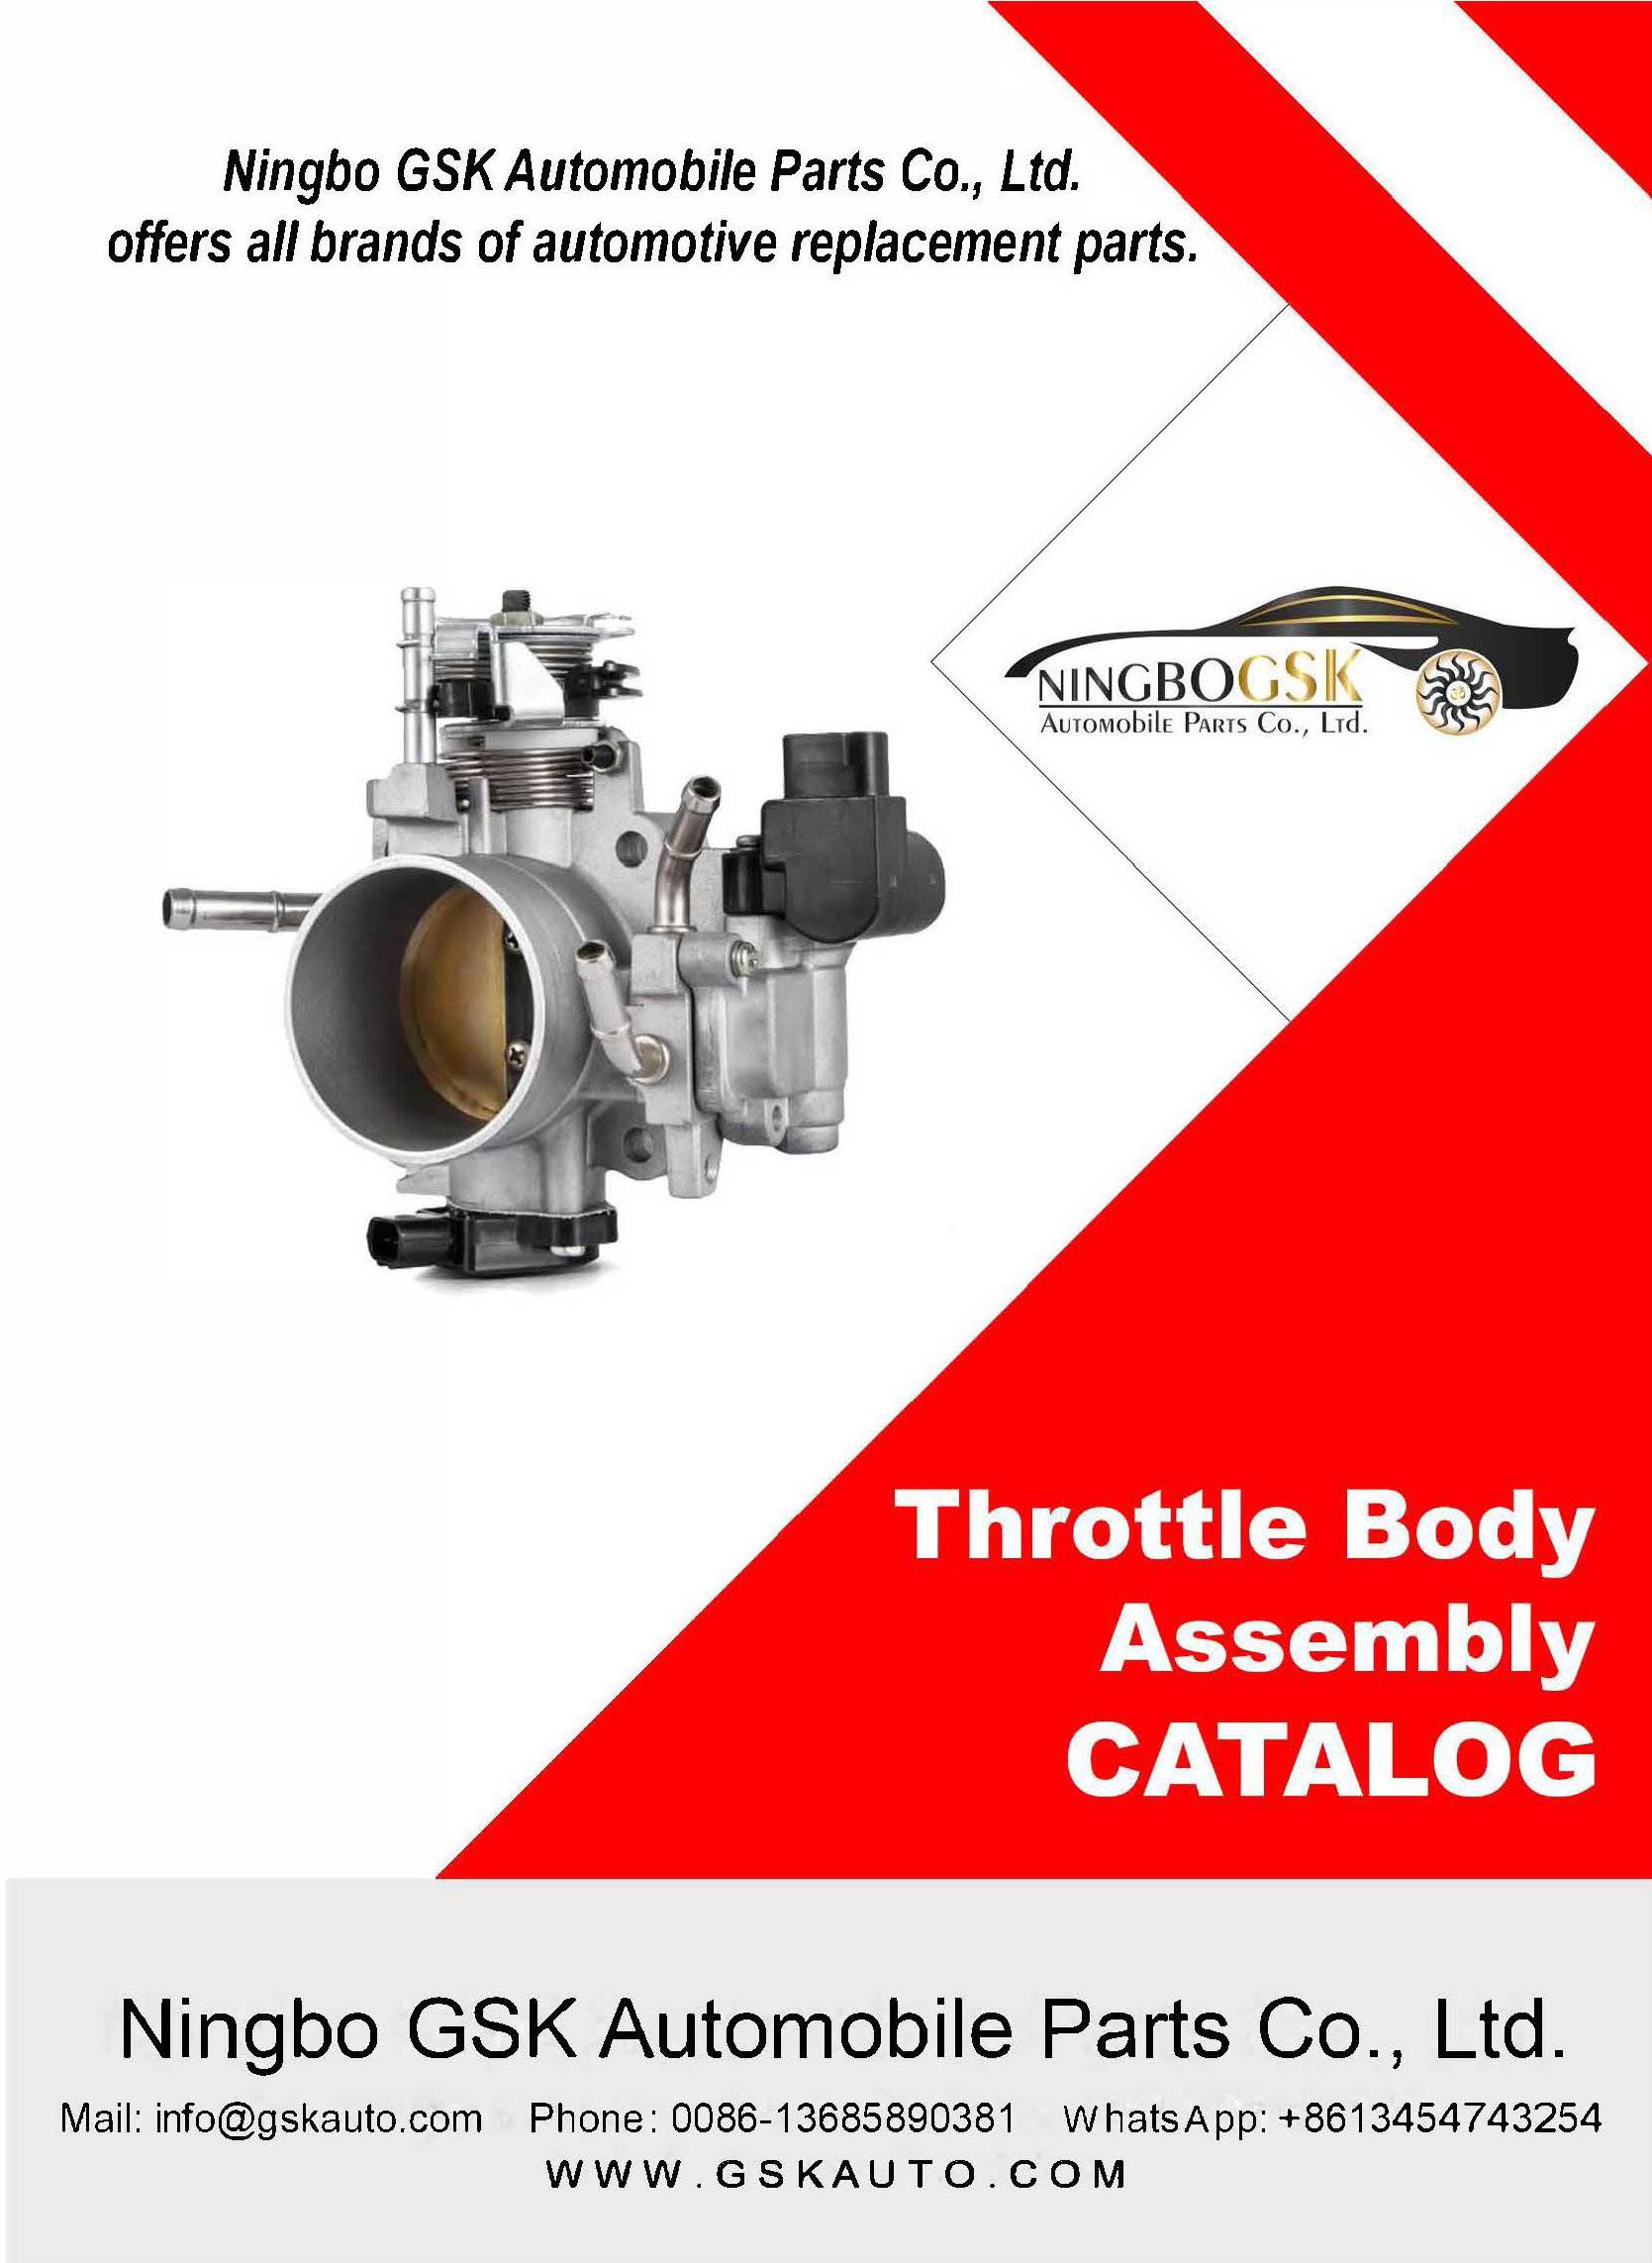 Throttle Body Assembly Catalog